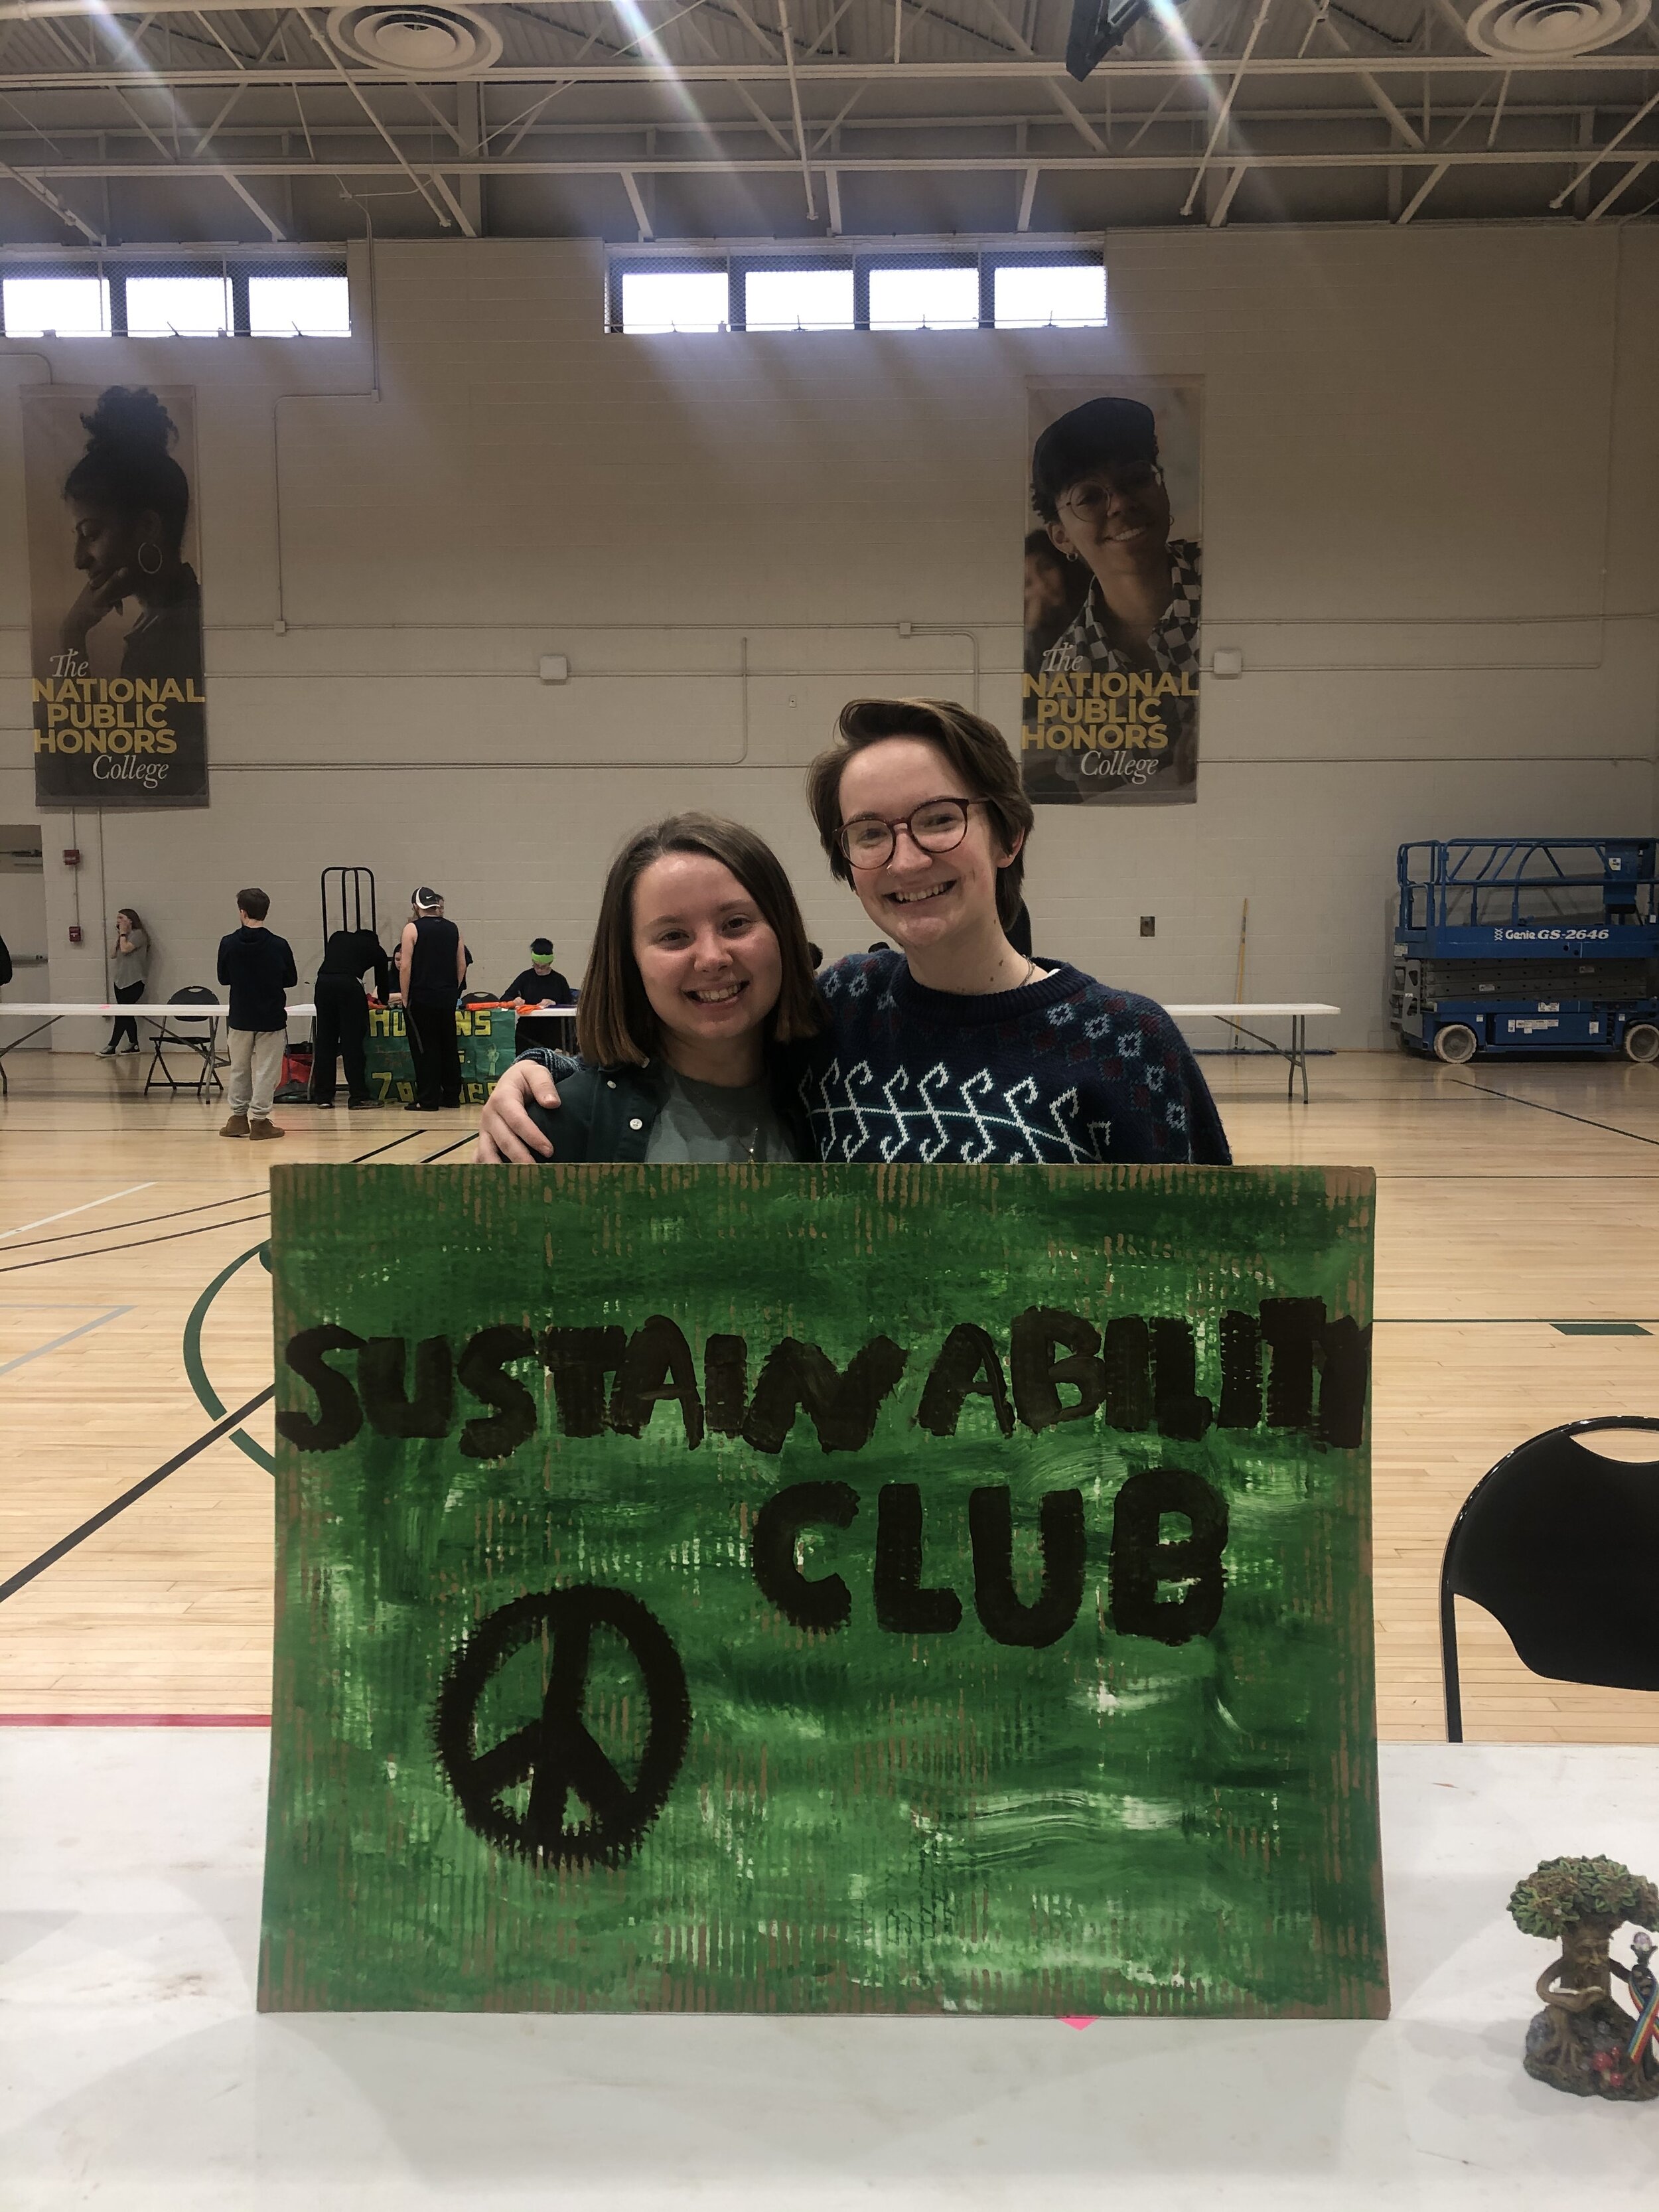 Sustainability Club